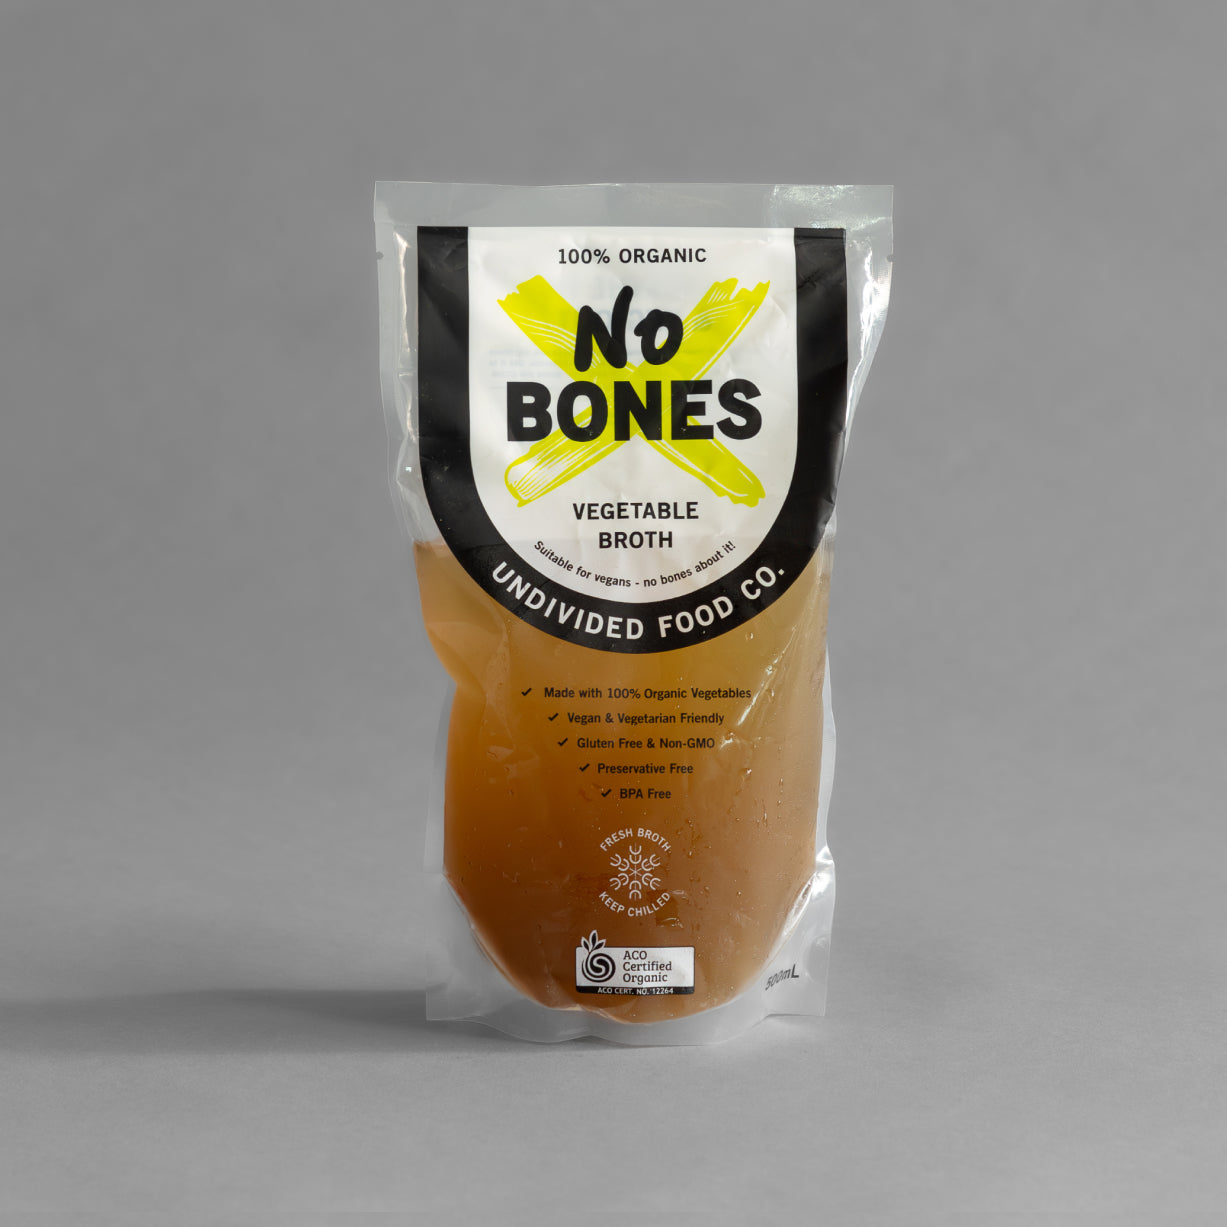 Undivided Food Co. 100% organic No Bones Vegetable Broth